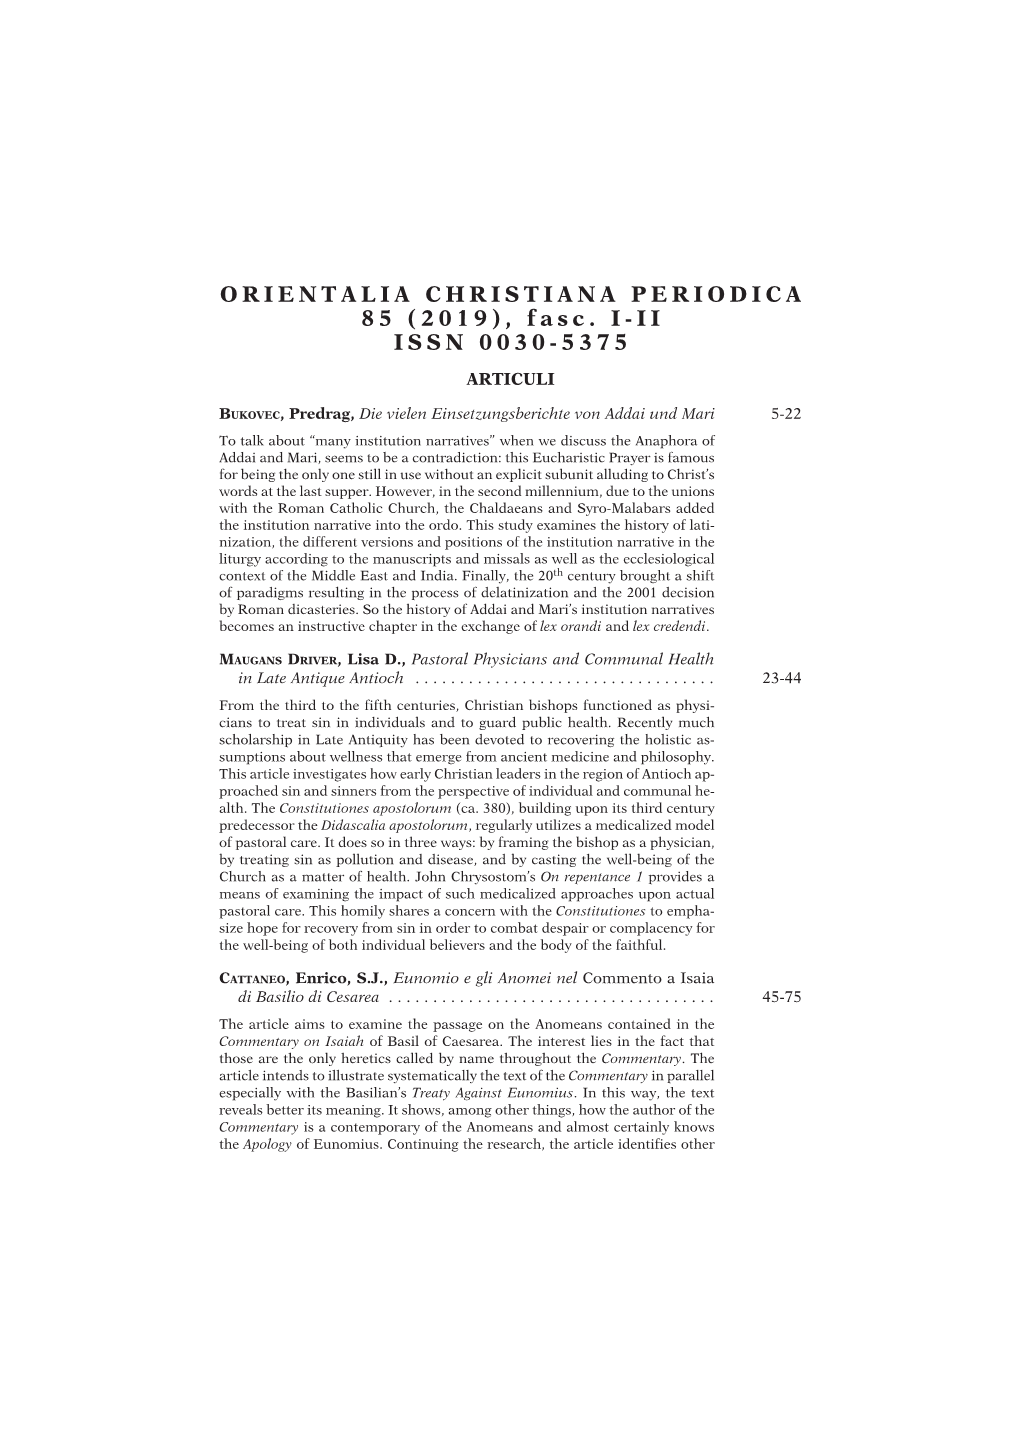 ORIENTALIA CHRISTIANA PERIODICA 85 (2019), Fasc. I-II ISSN 0030-5375 ARTICULI